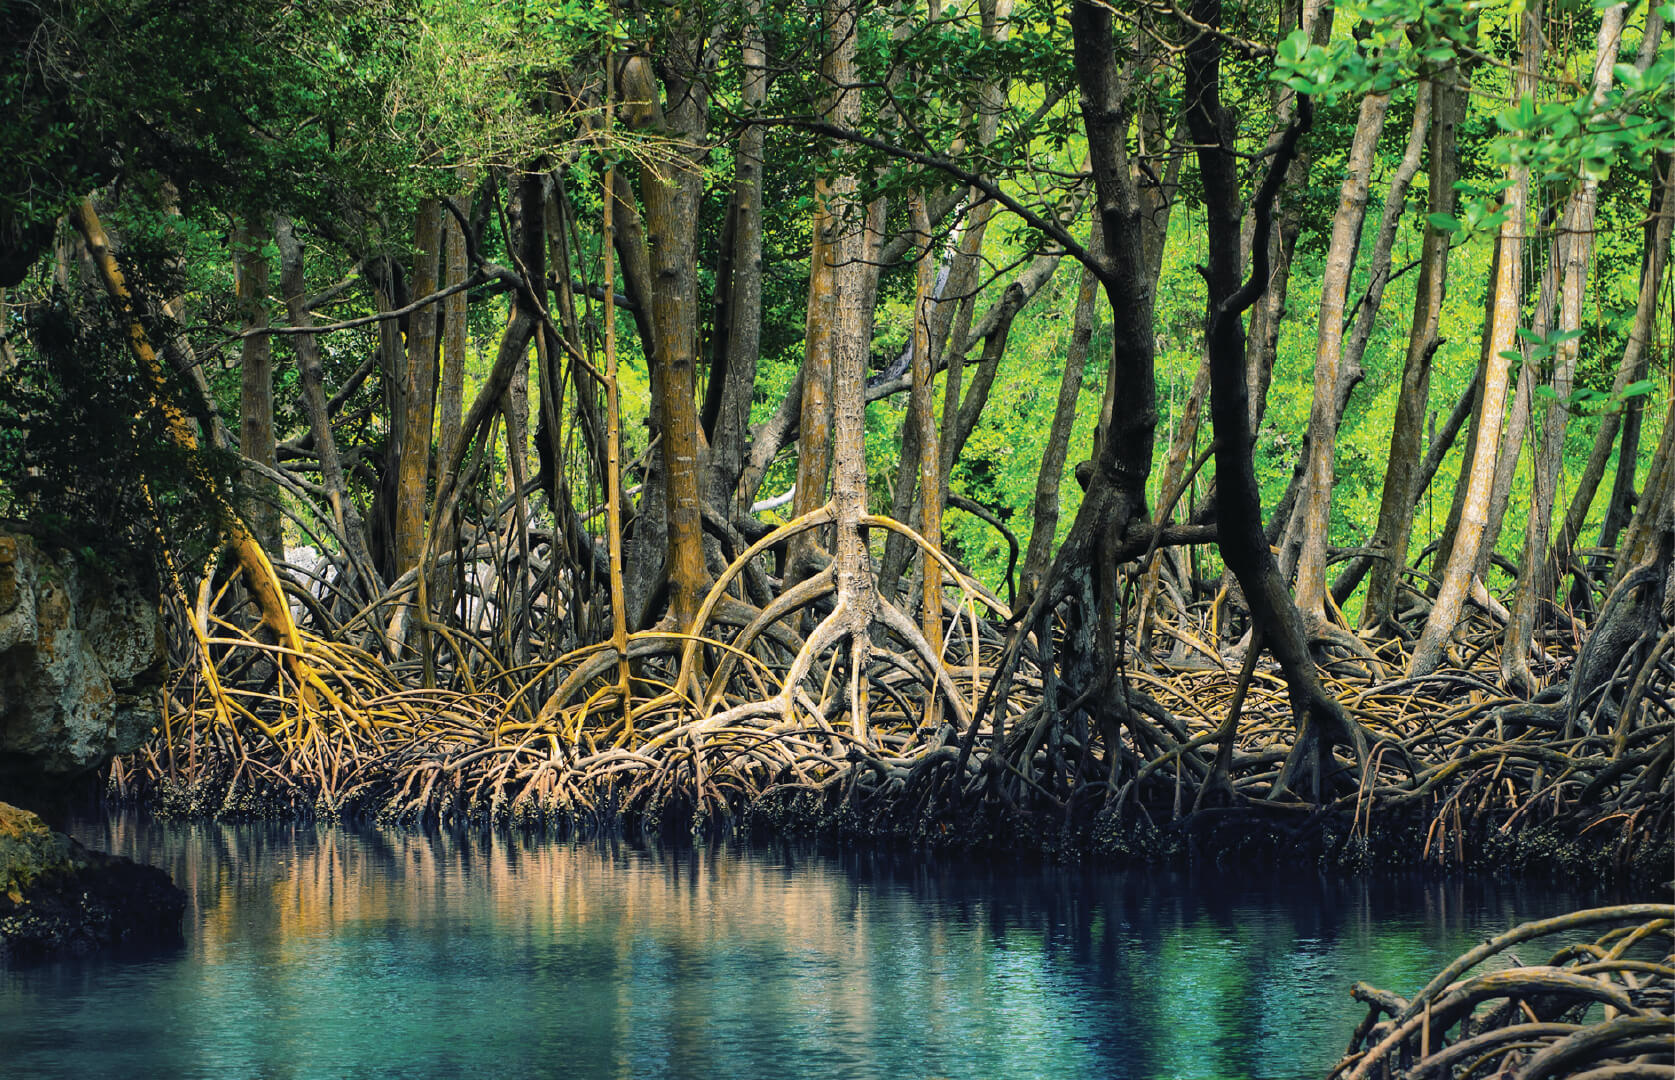 Mangrove preservation